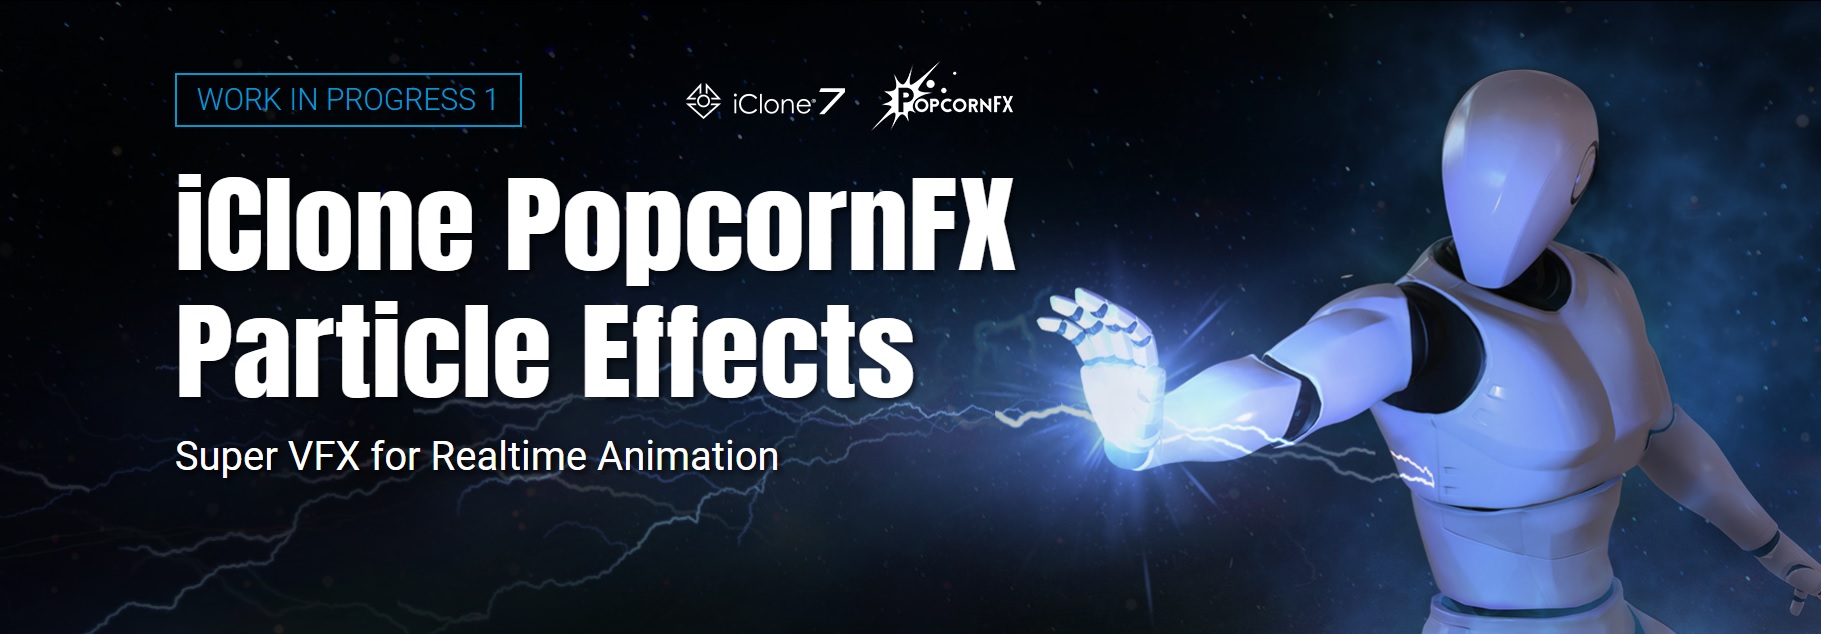 popcornfx iclone